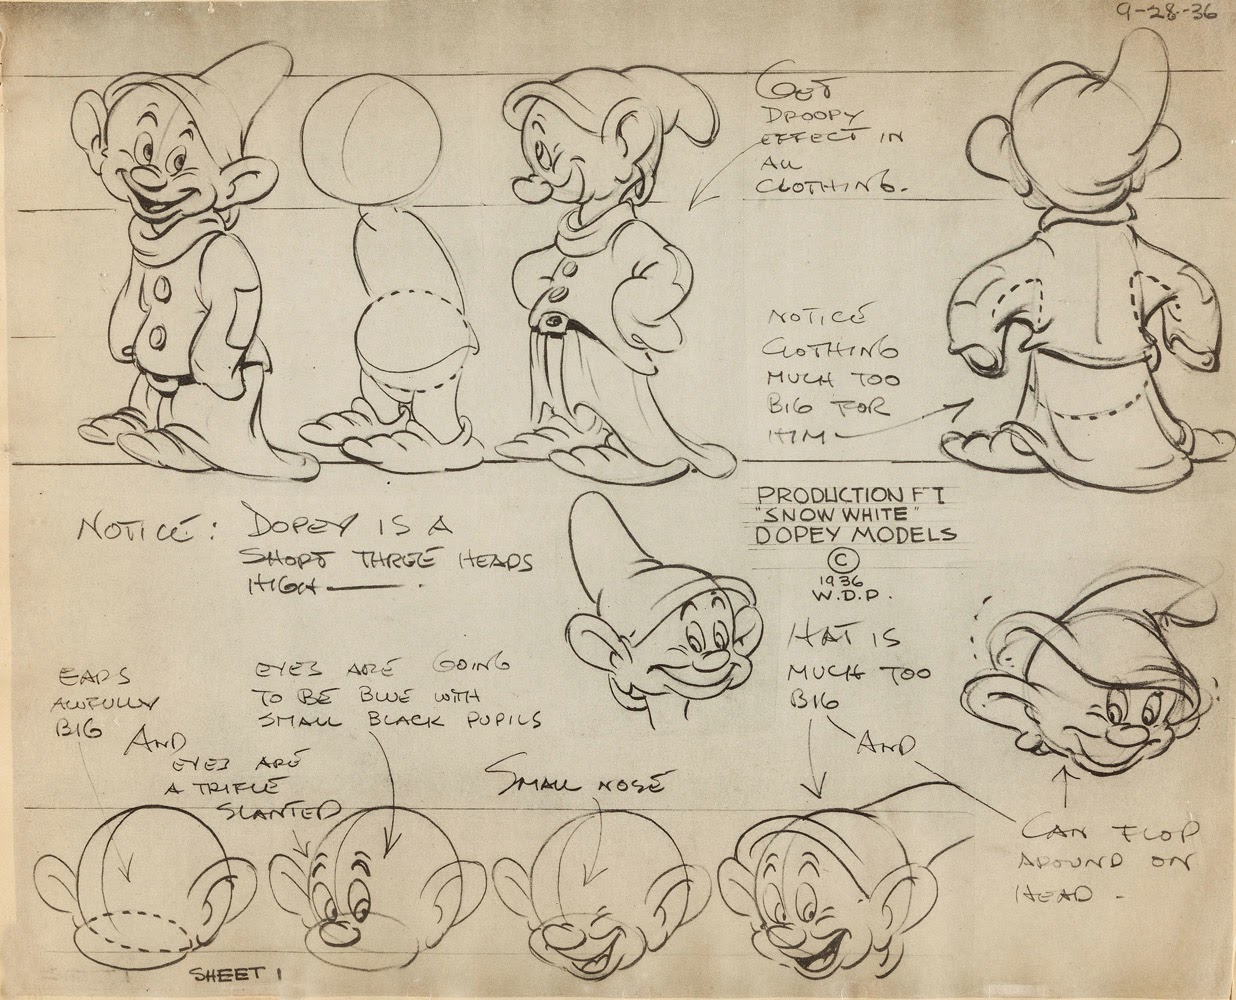 Snow White and the Seven Dwarfs Model Sheets Disney, 1936-09